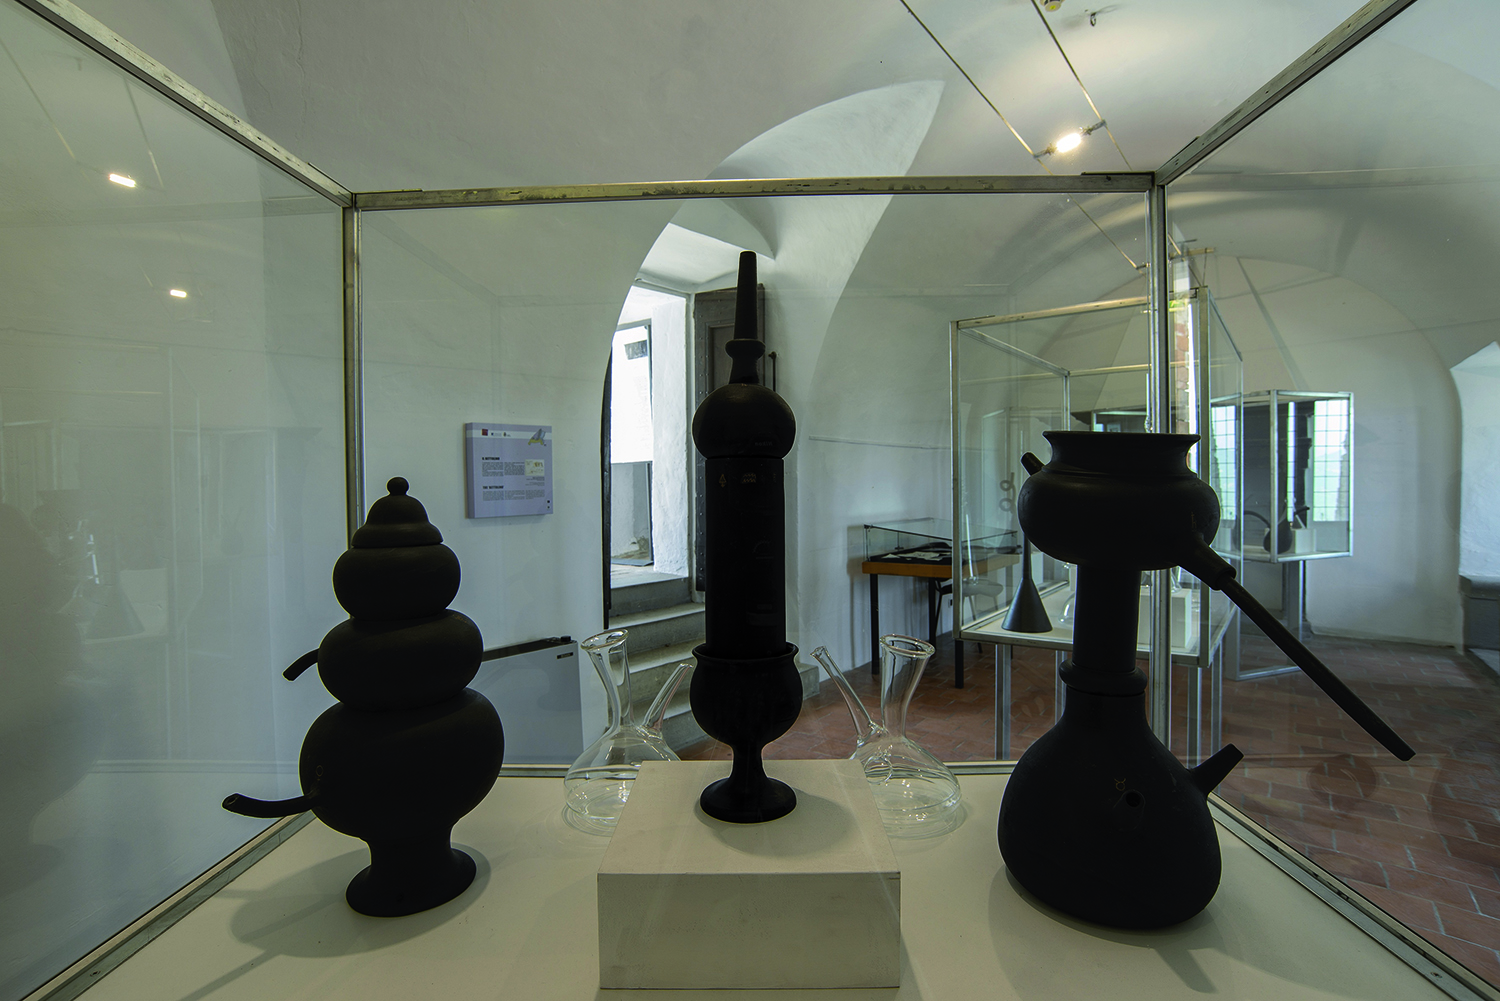 Visione d’insieme – Ceramiche alchemiche e vetri soffiati Ceramica a ingobbio nero, incisa a punta di bulino (misure variabili)